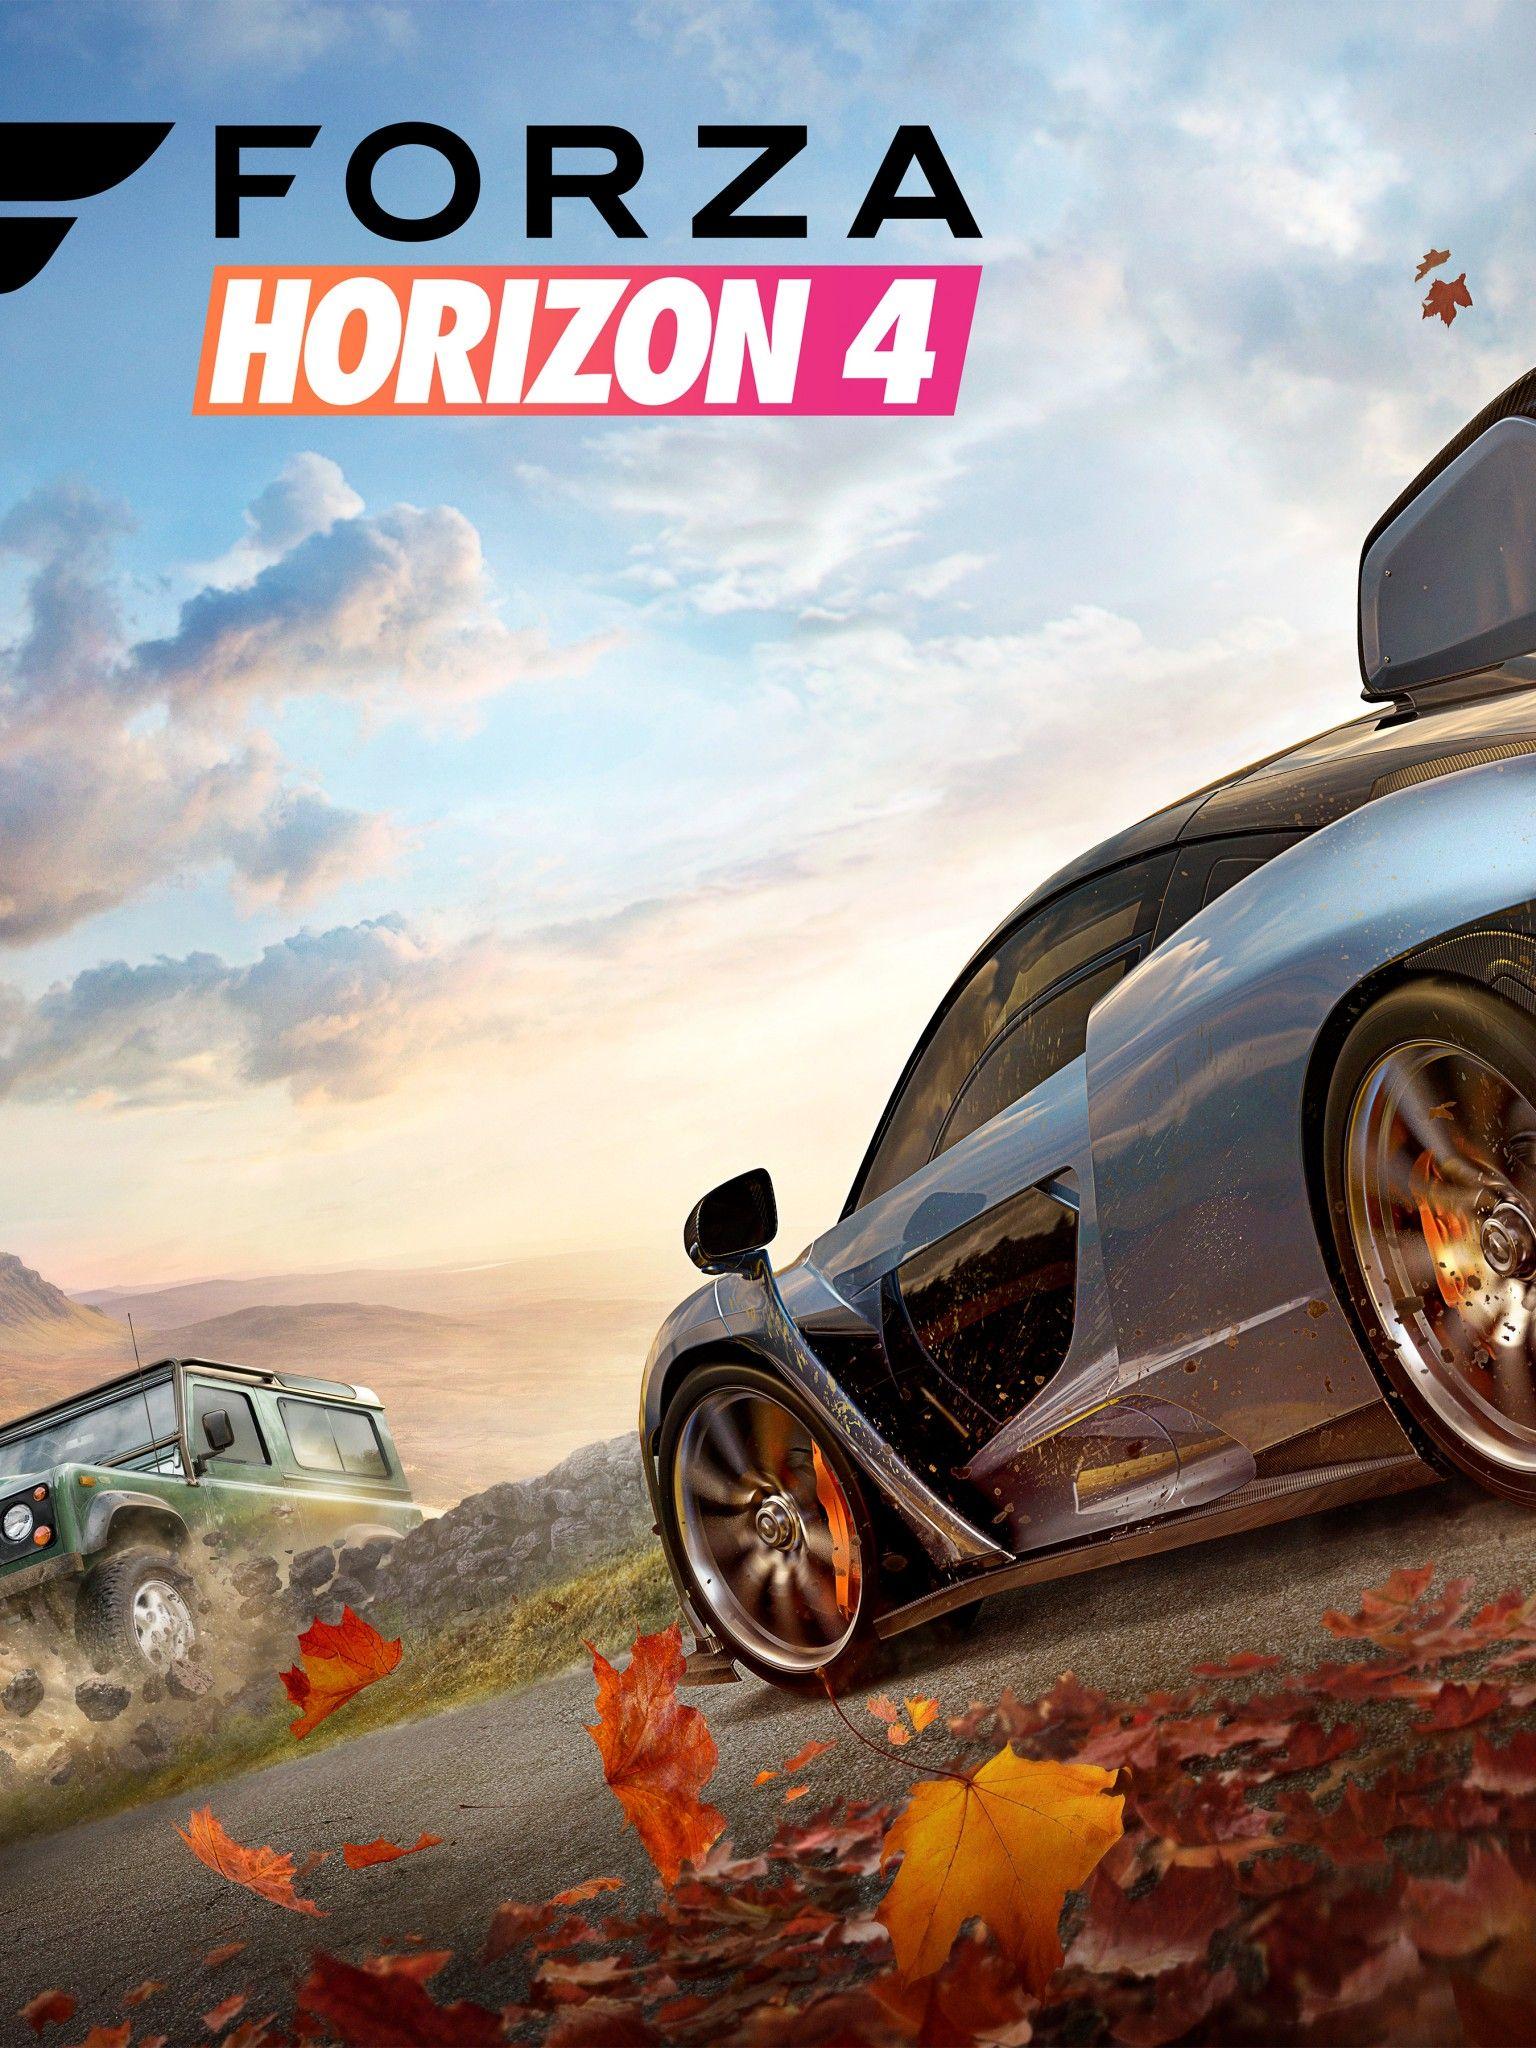 Forza Horizon 4 Wallpapers Top Free Forza Horizon 4 Backgrounds Wallpaperaccess